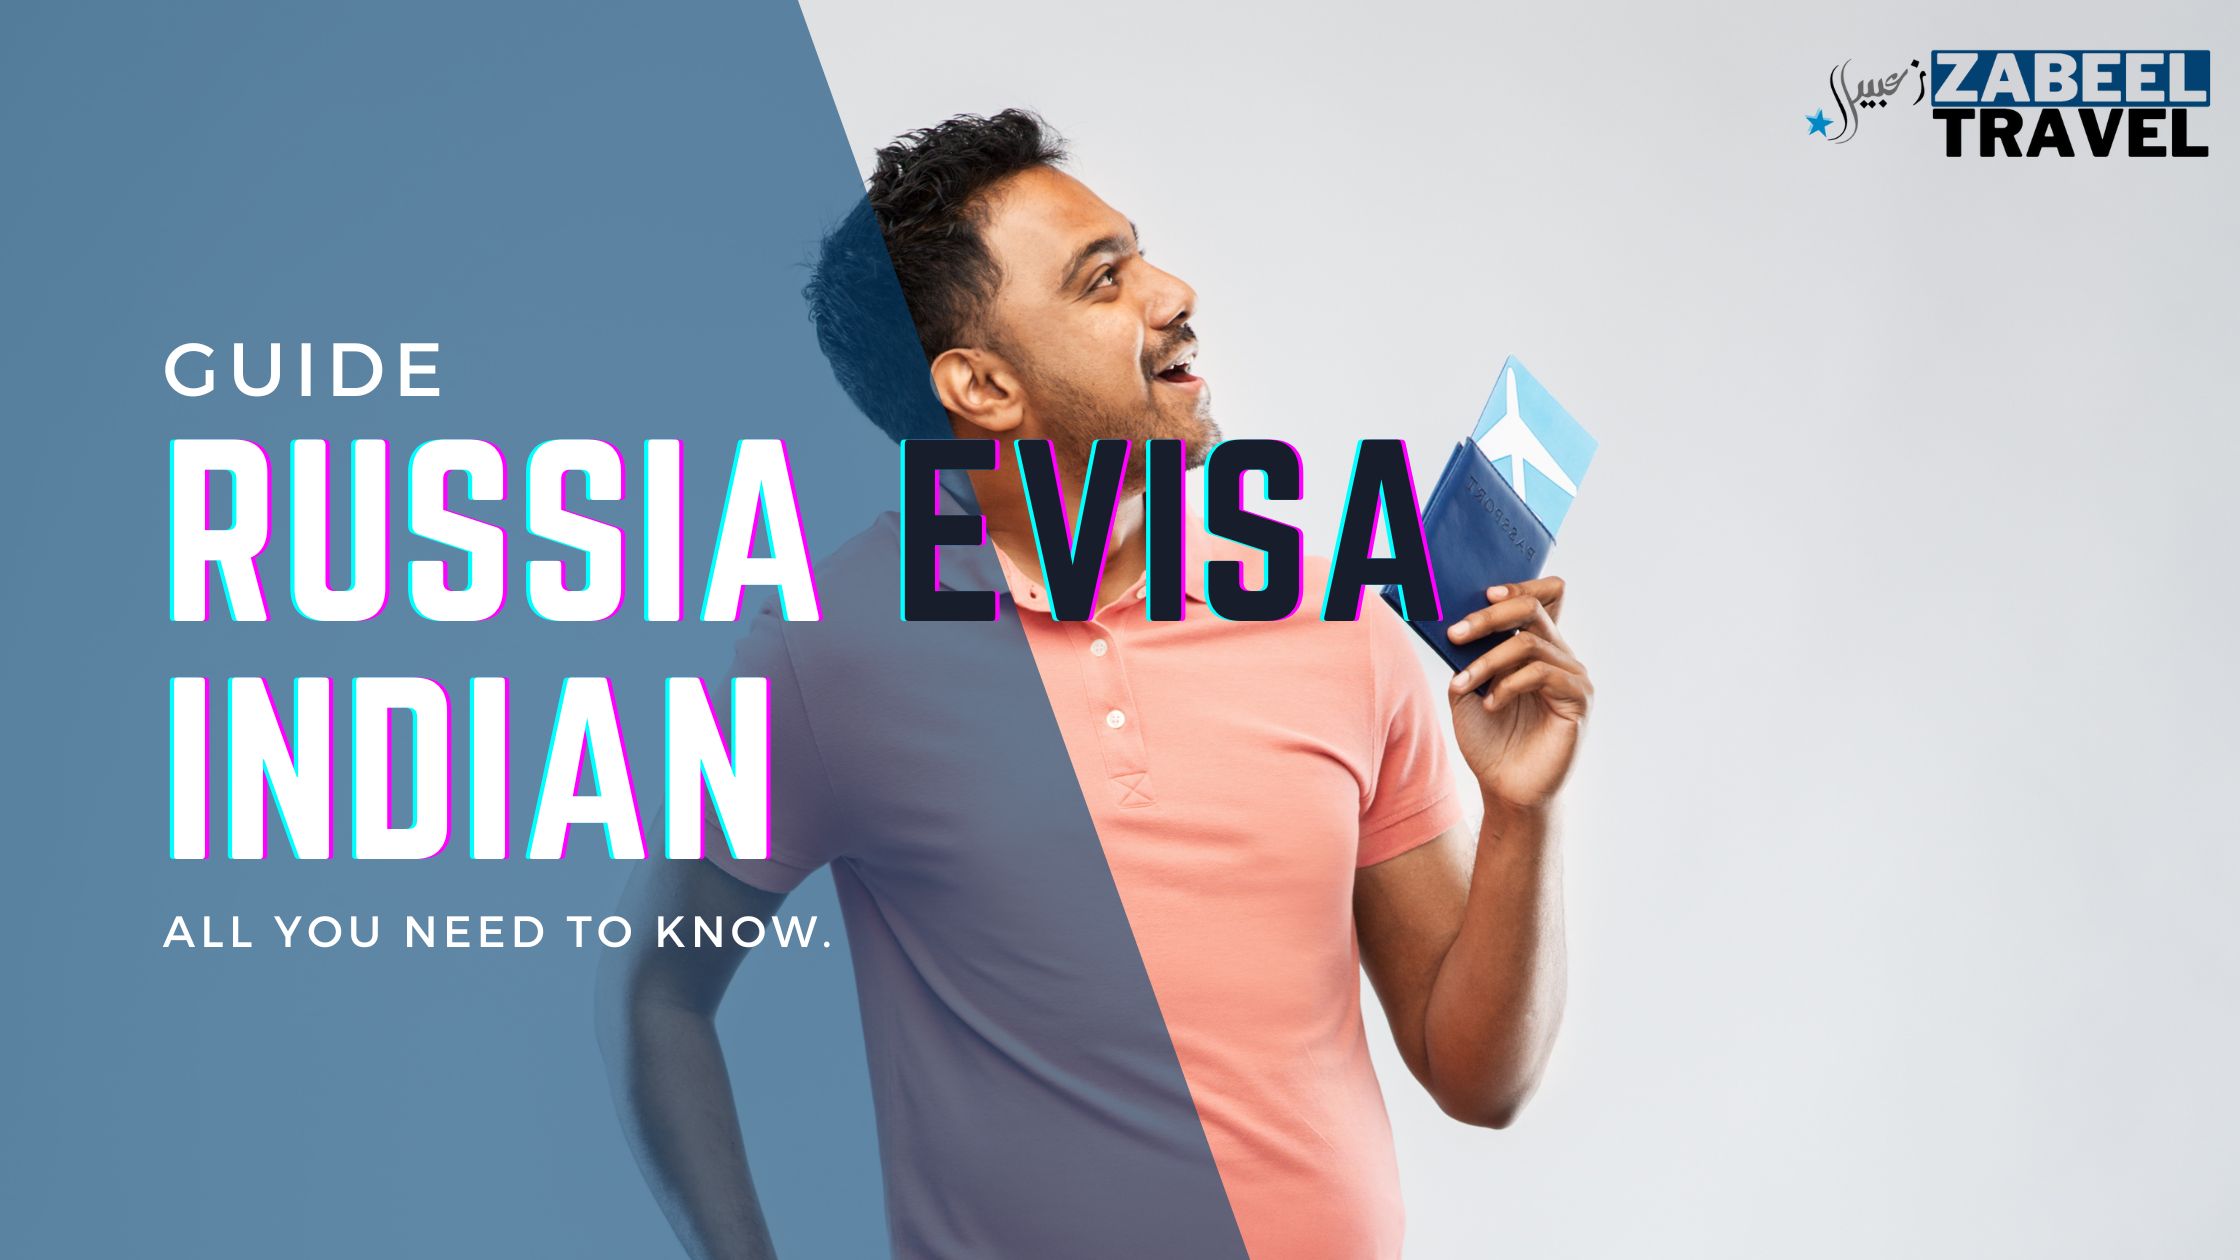 Russia e visa Indian